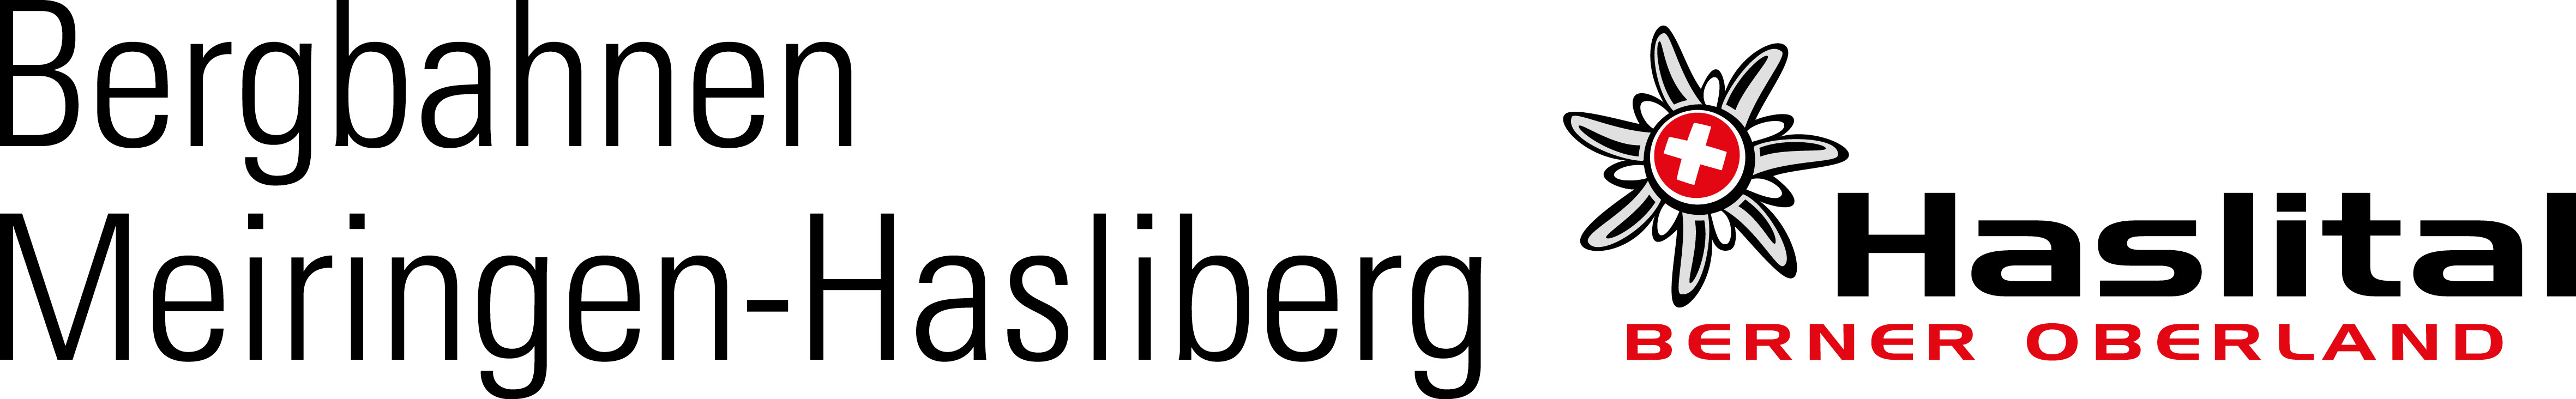 Meiringen-Hasliberg - Logo